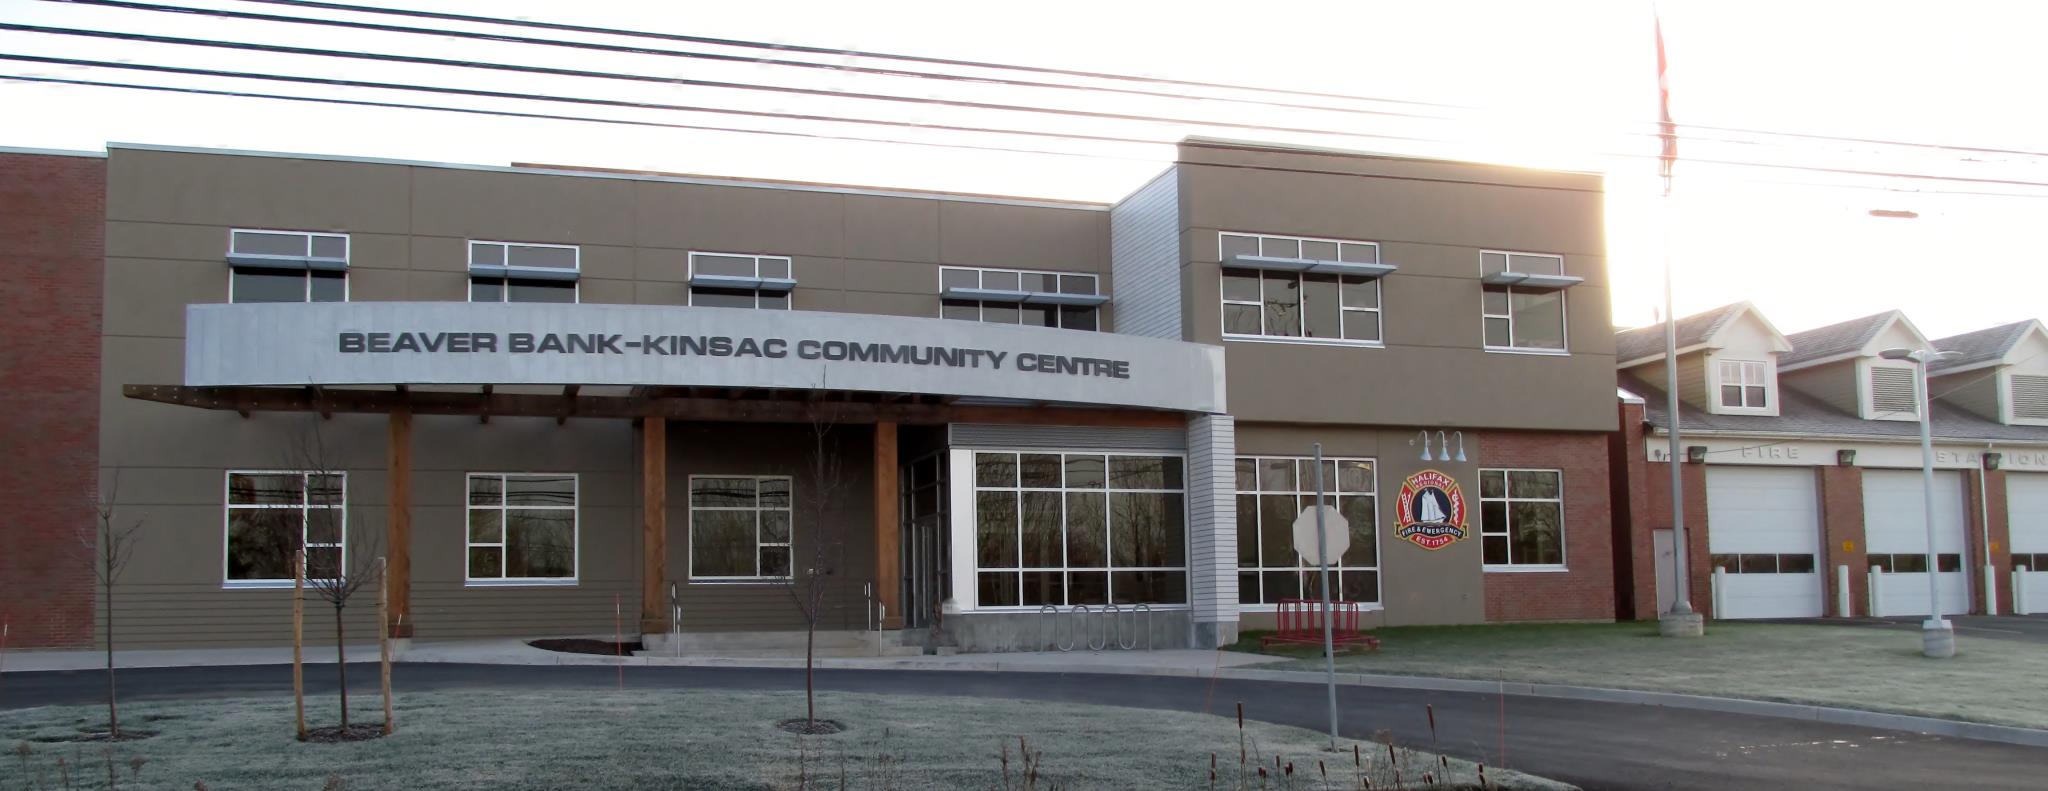 Beaver Bank-Kinsac Community Centre